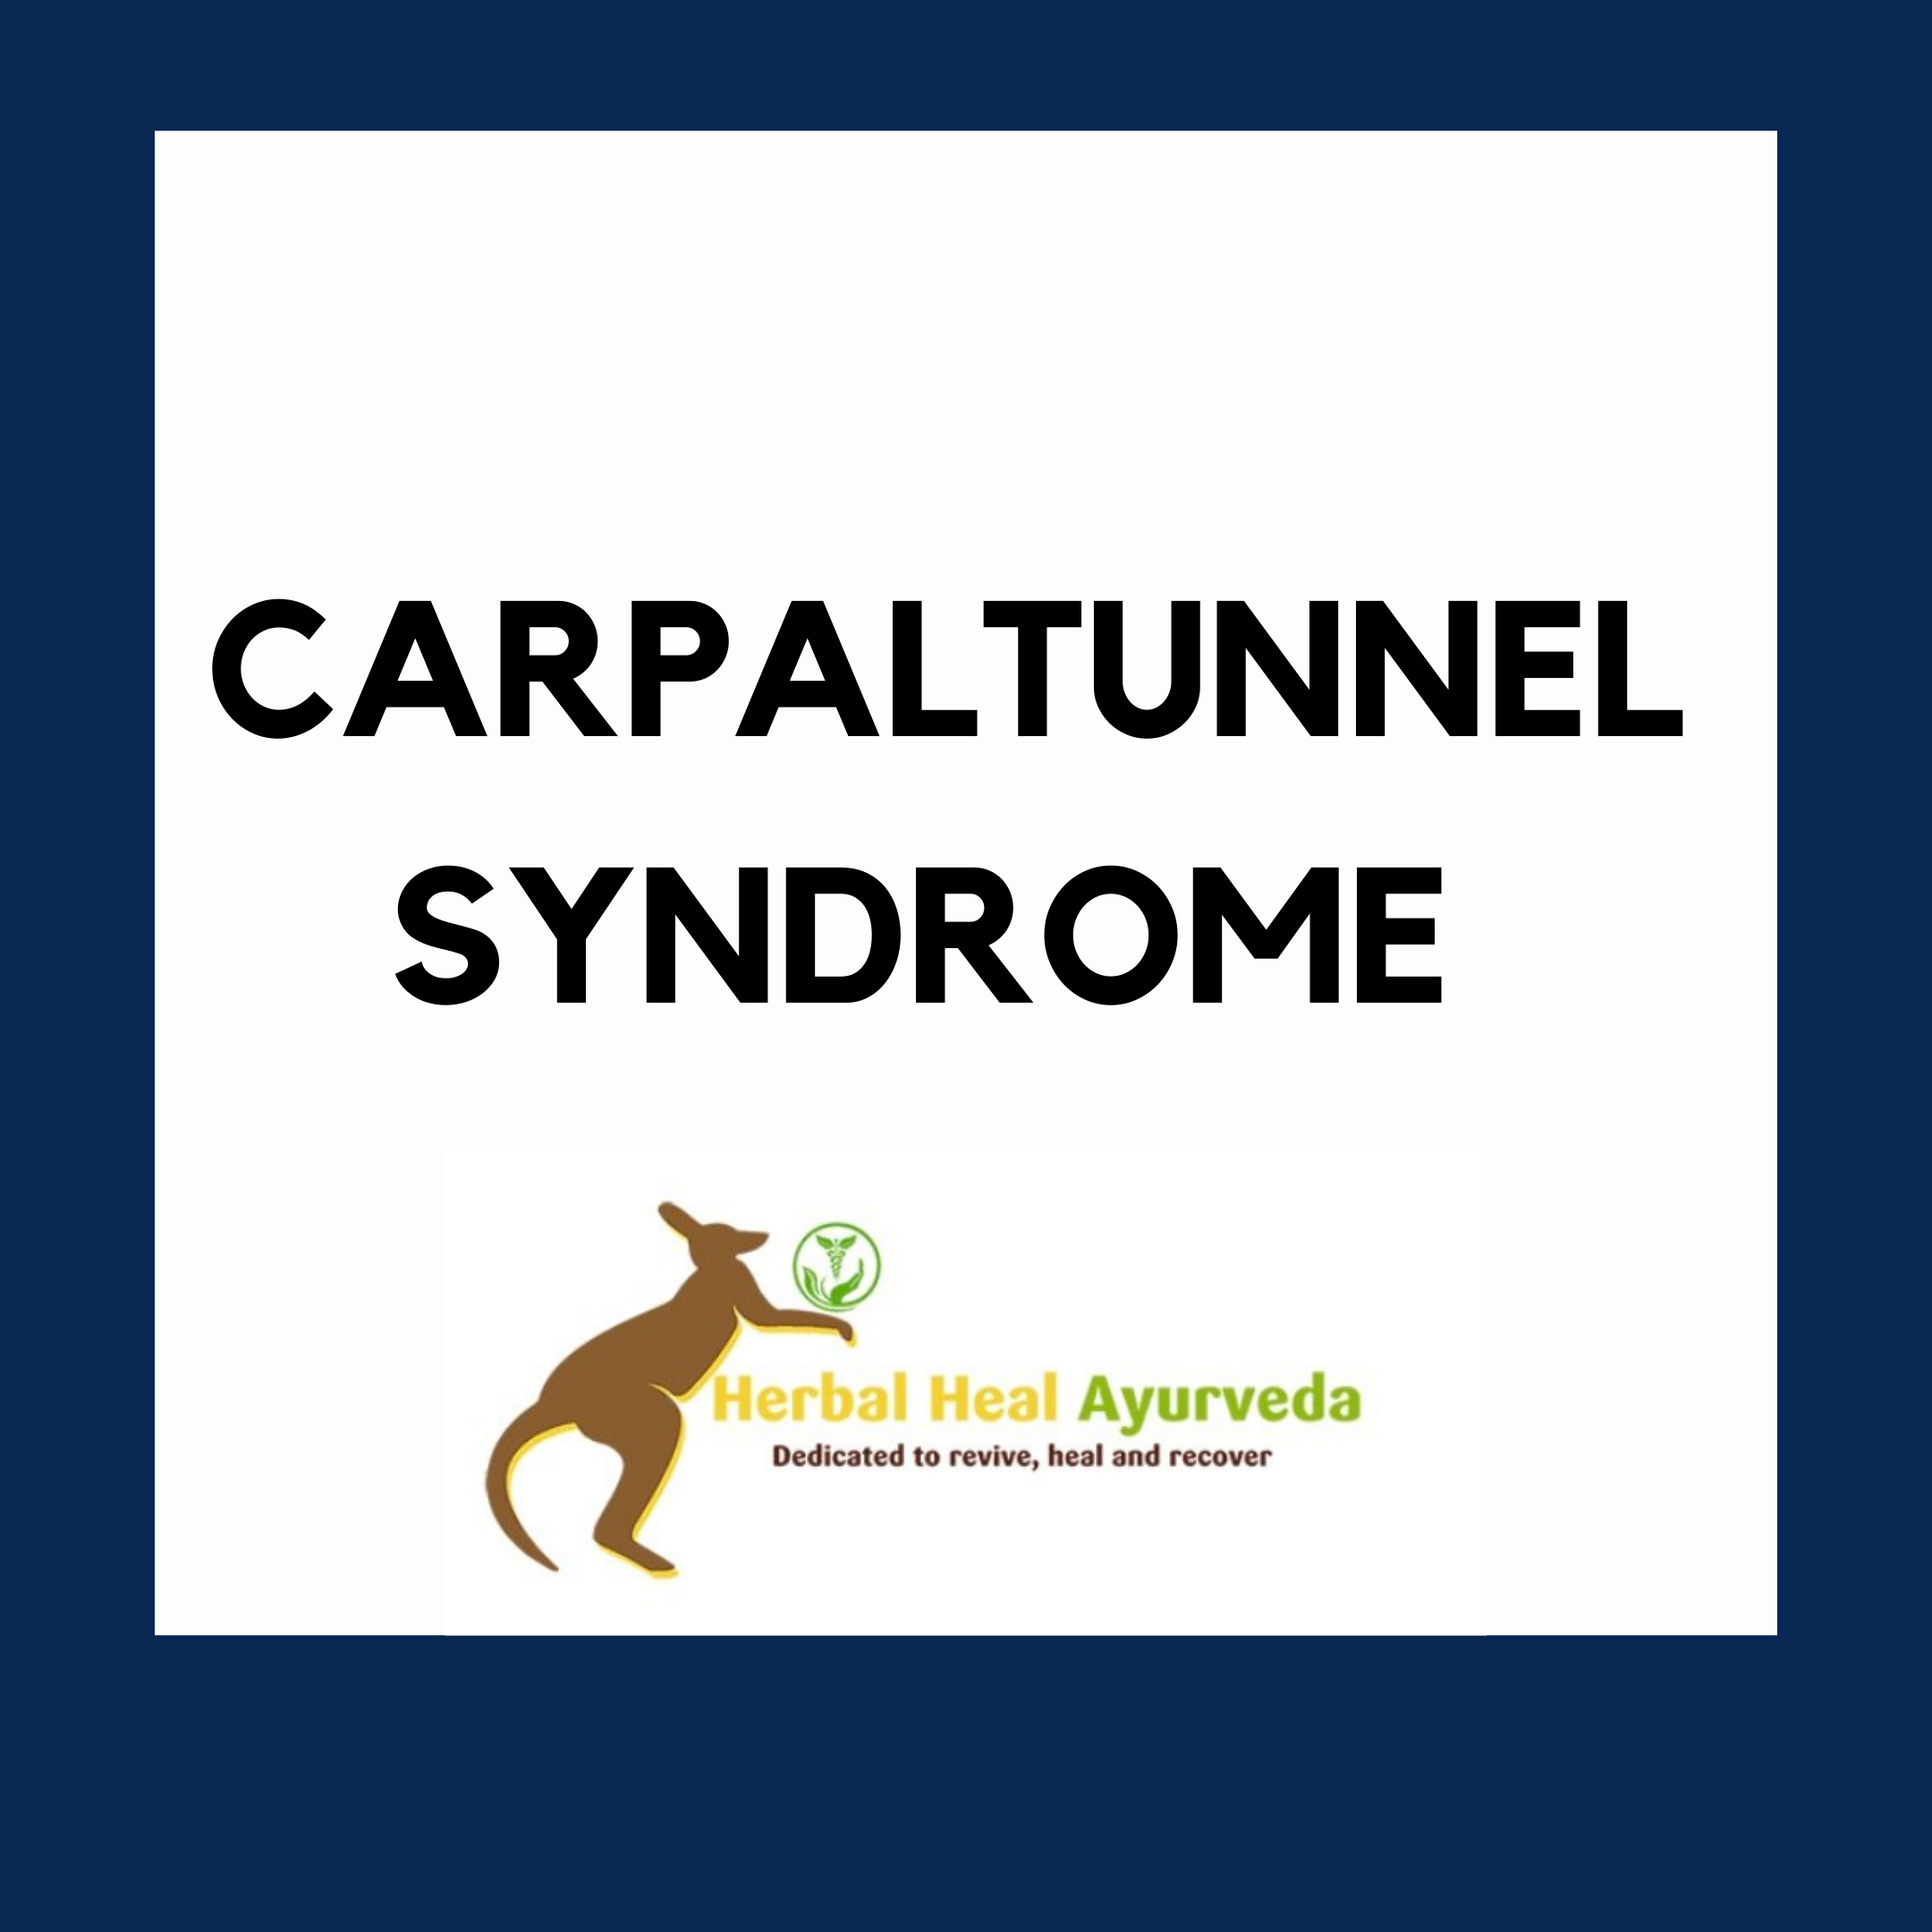 Herbal Heal Ayurveda Sydney-Carpal Tunnel Syndrome